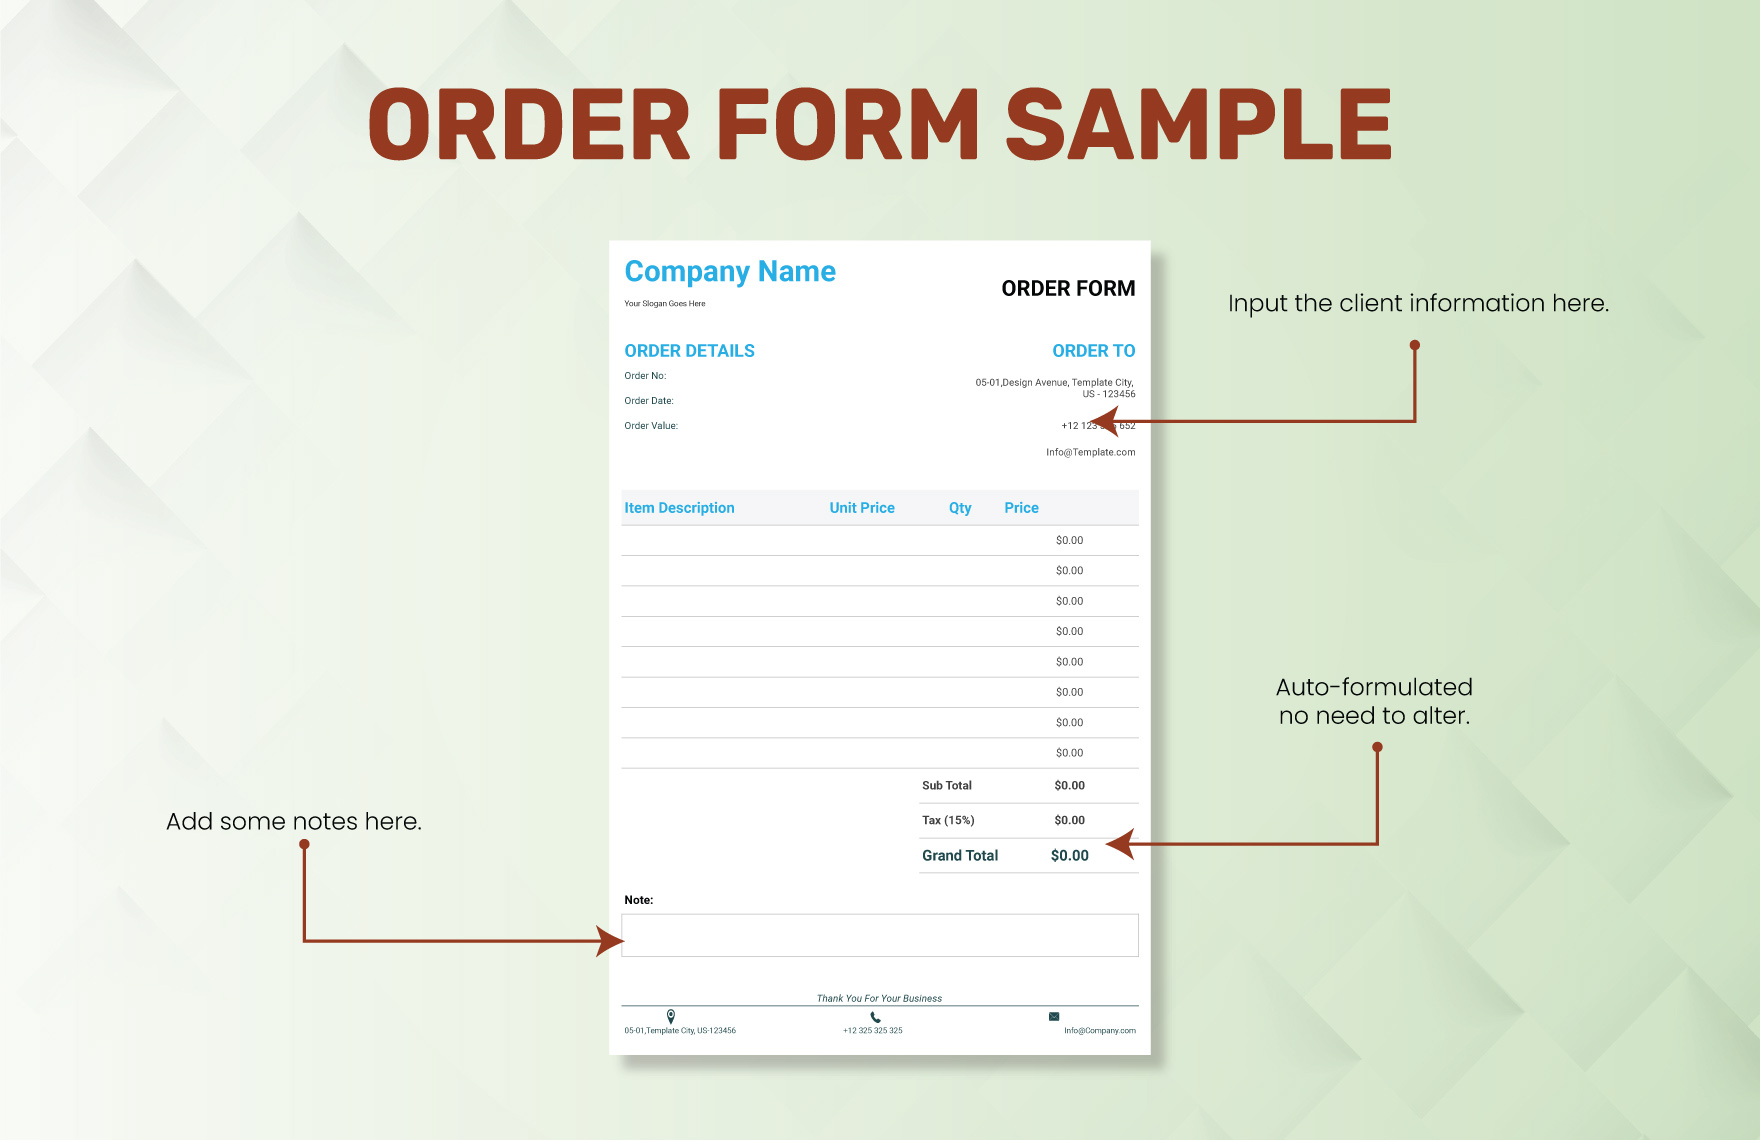 Order Form Sample Template